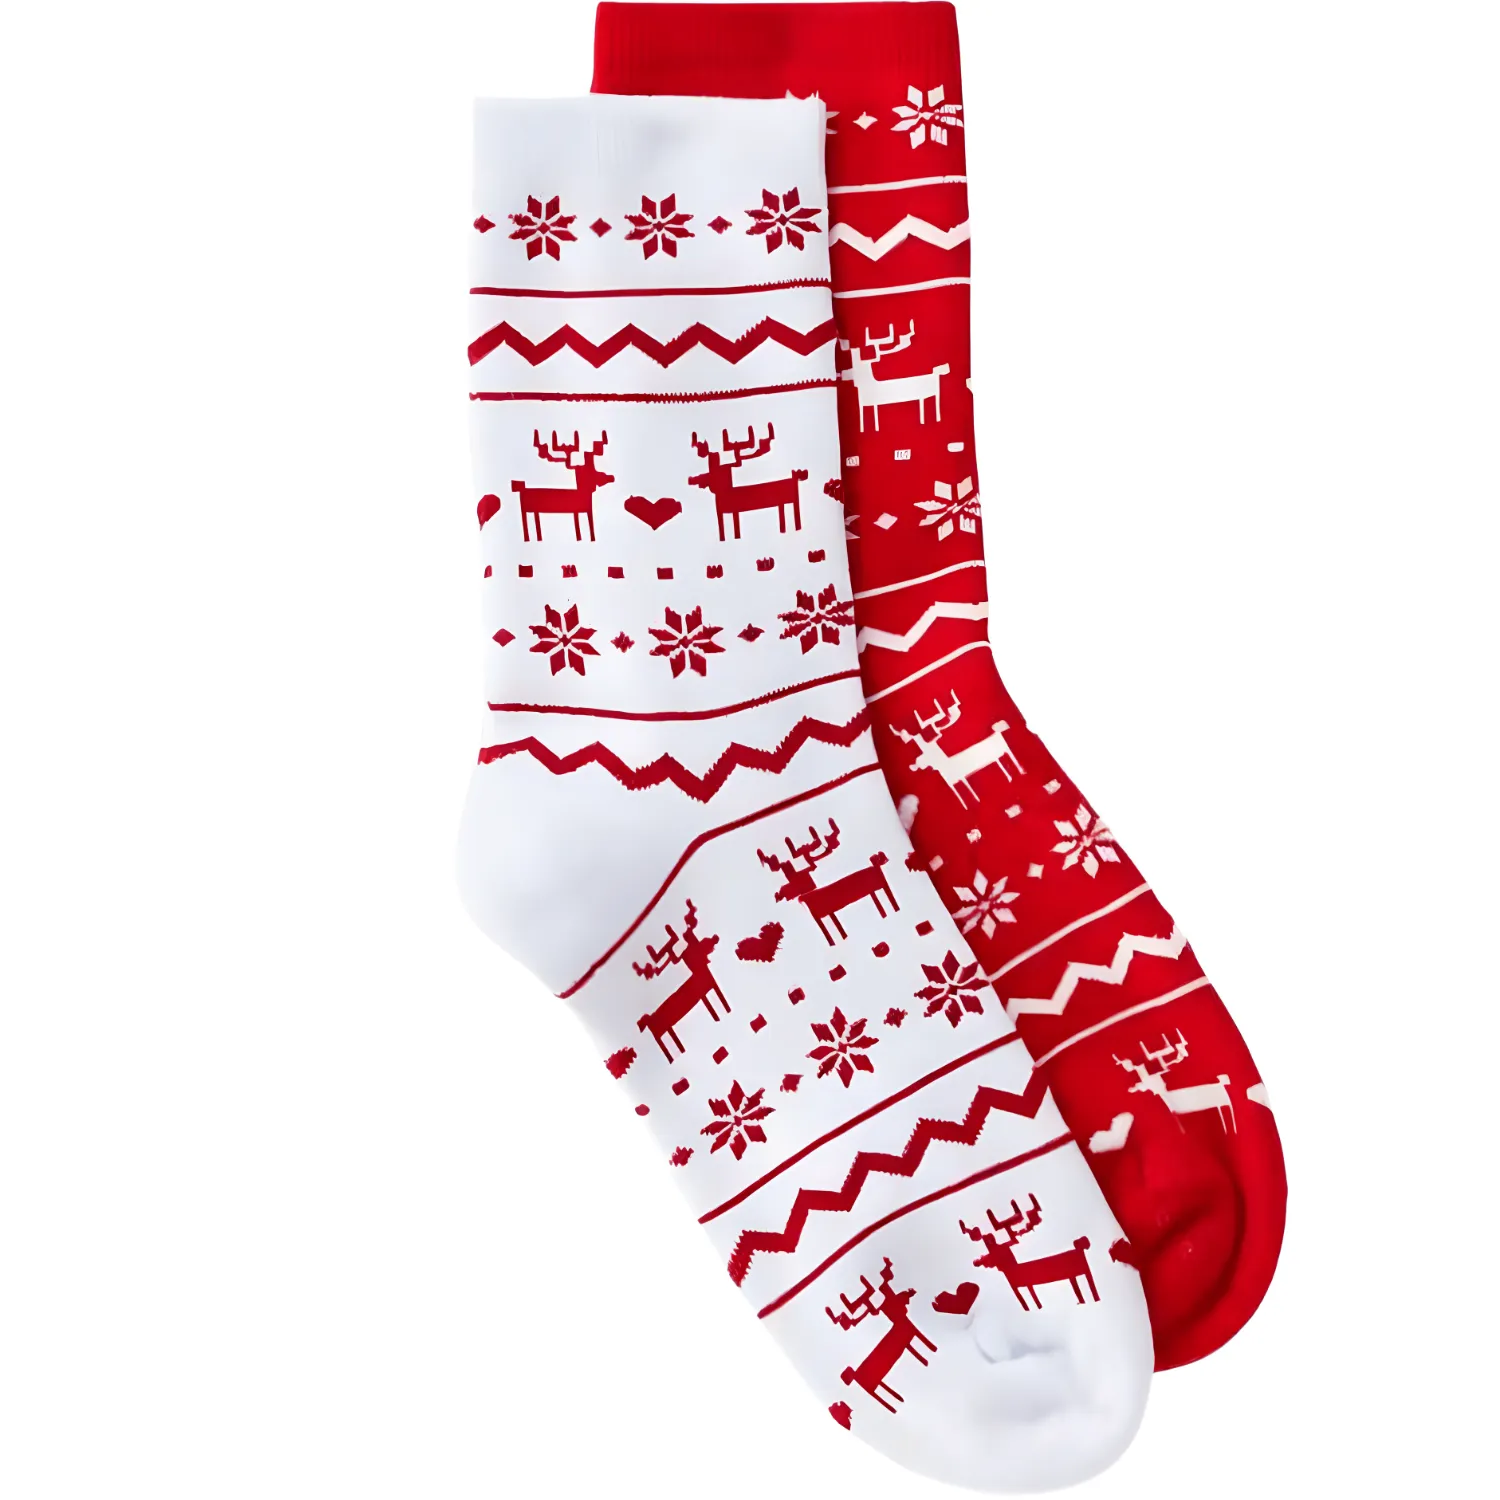 Free Christmas Socks From Vodafone Uk